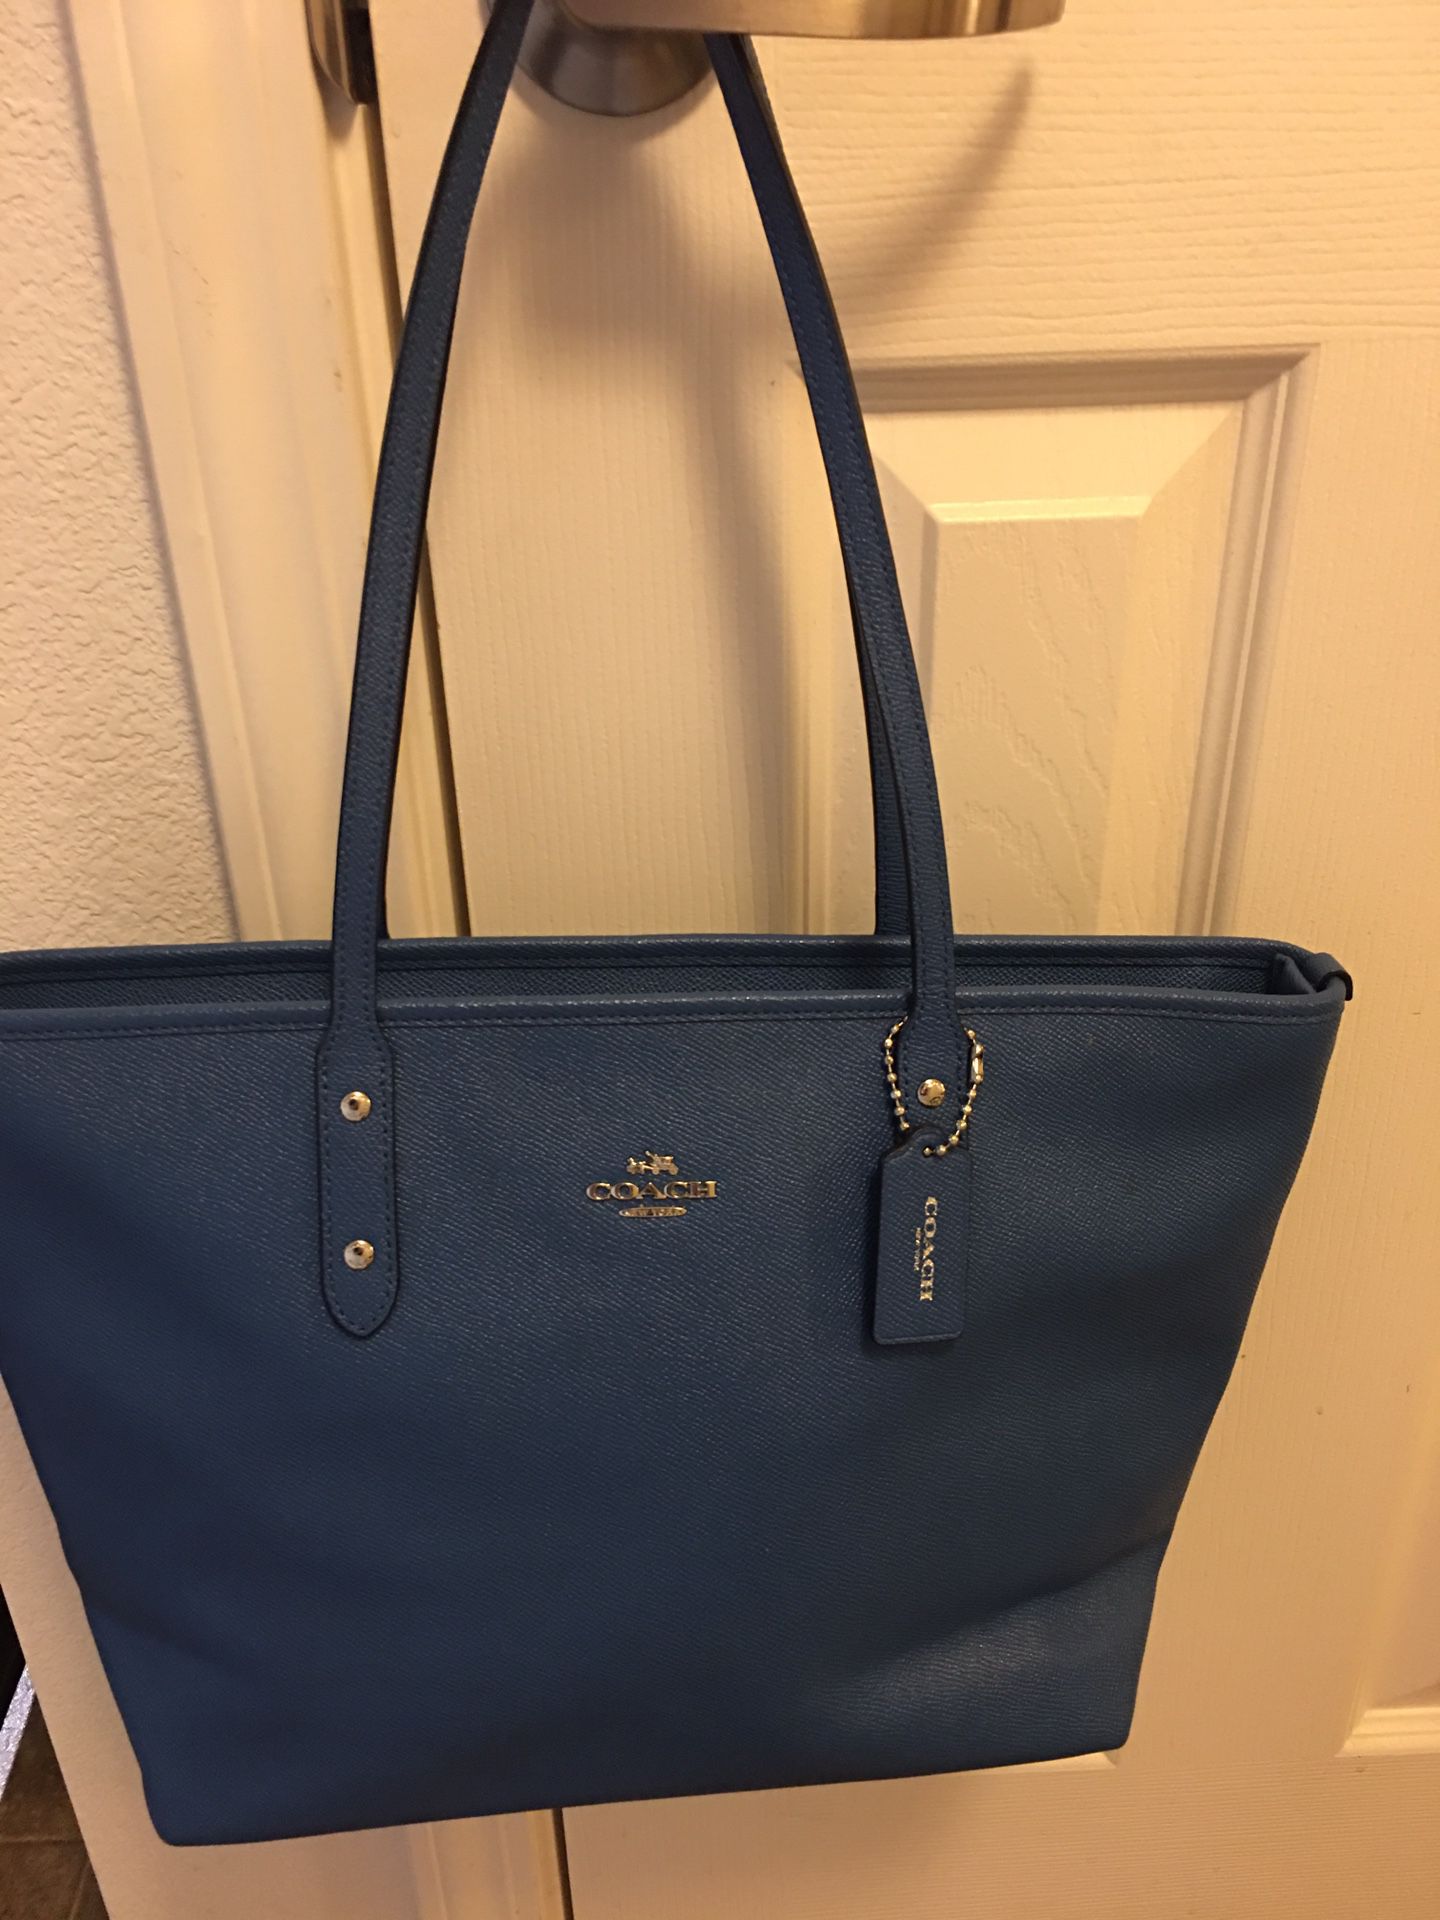 Beautiful blue authentic coach leather purse